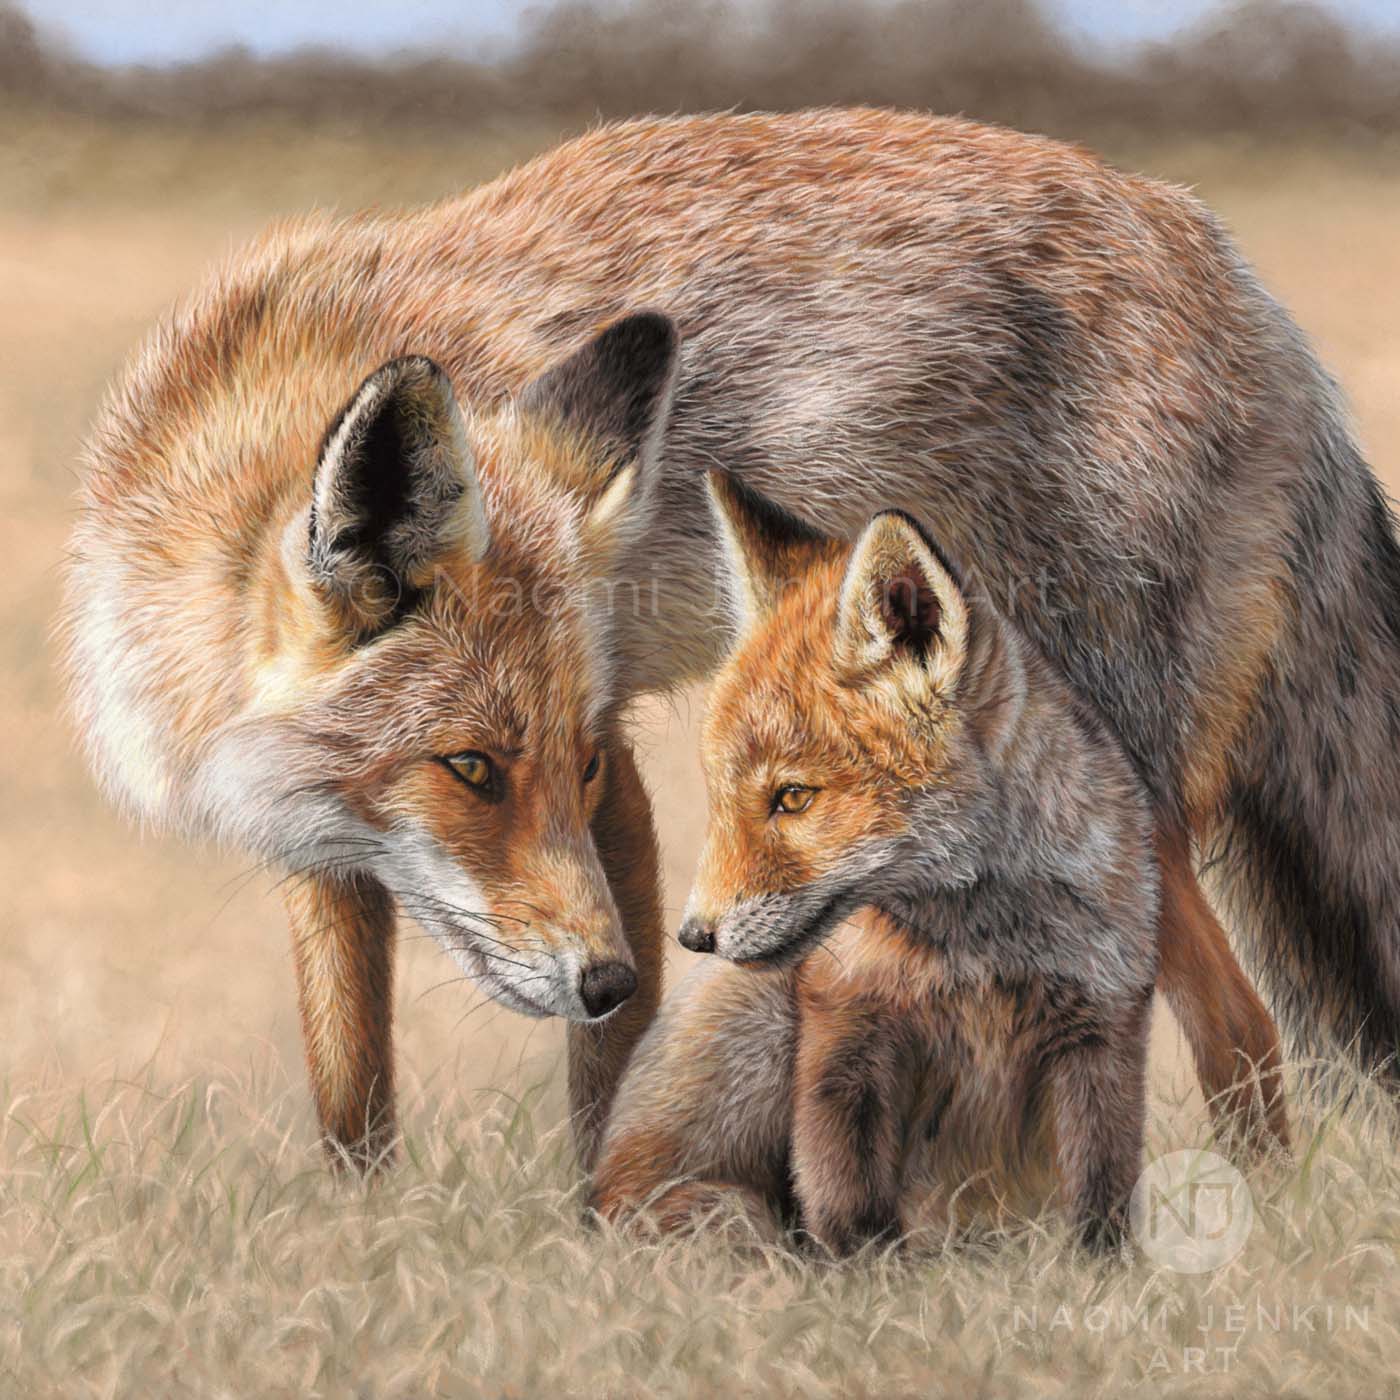 Fox drawing by wildlife artist Naomi Jenkin. 